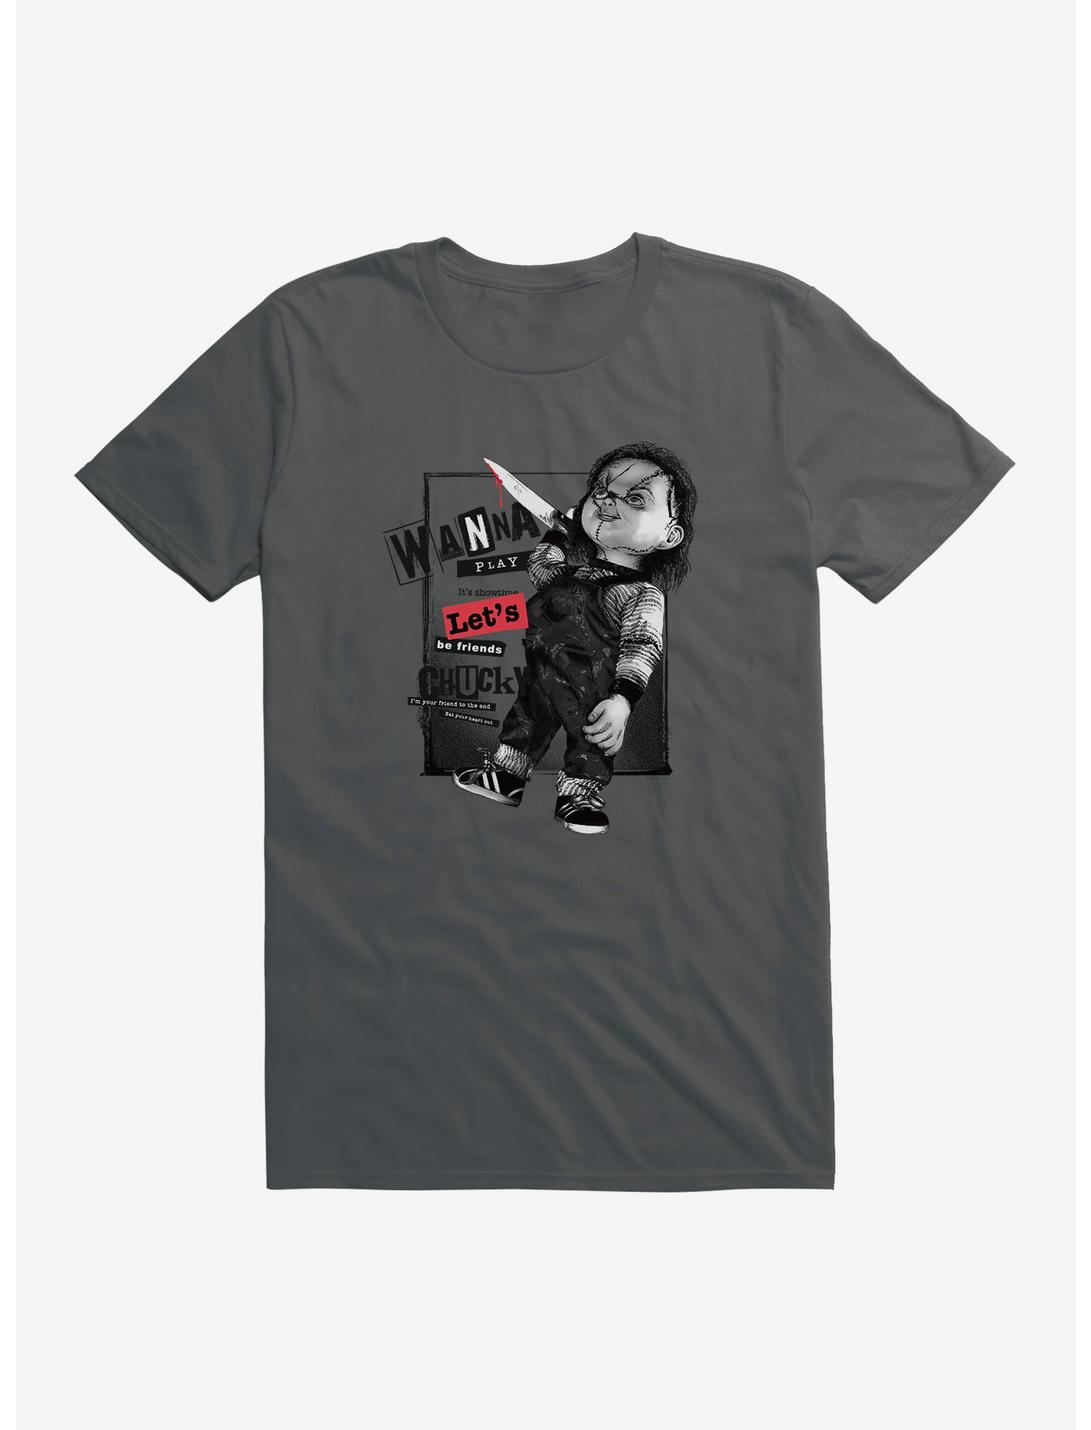 Chucky Wanna Play T-Shirt, , hi-res